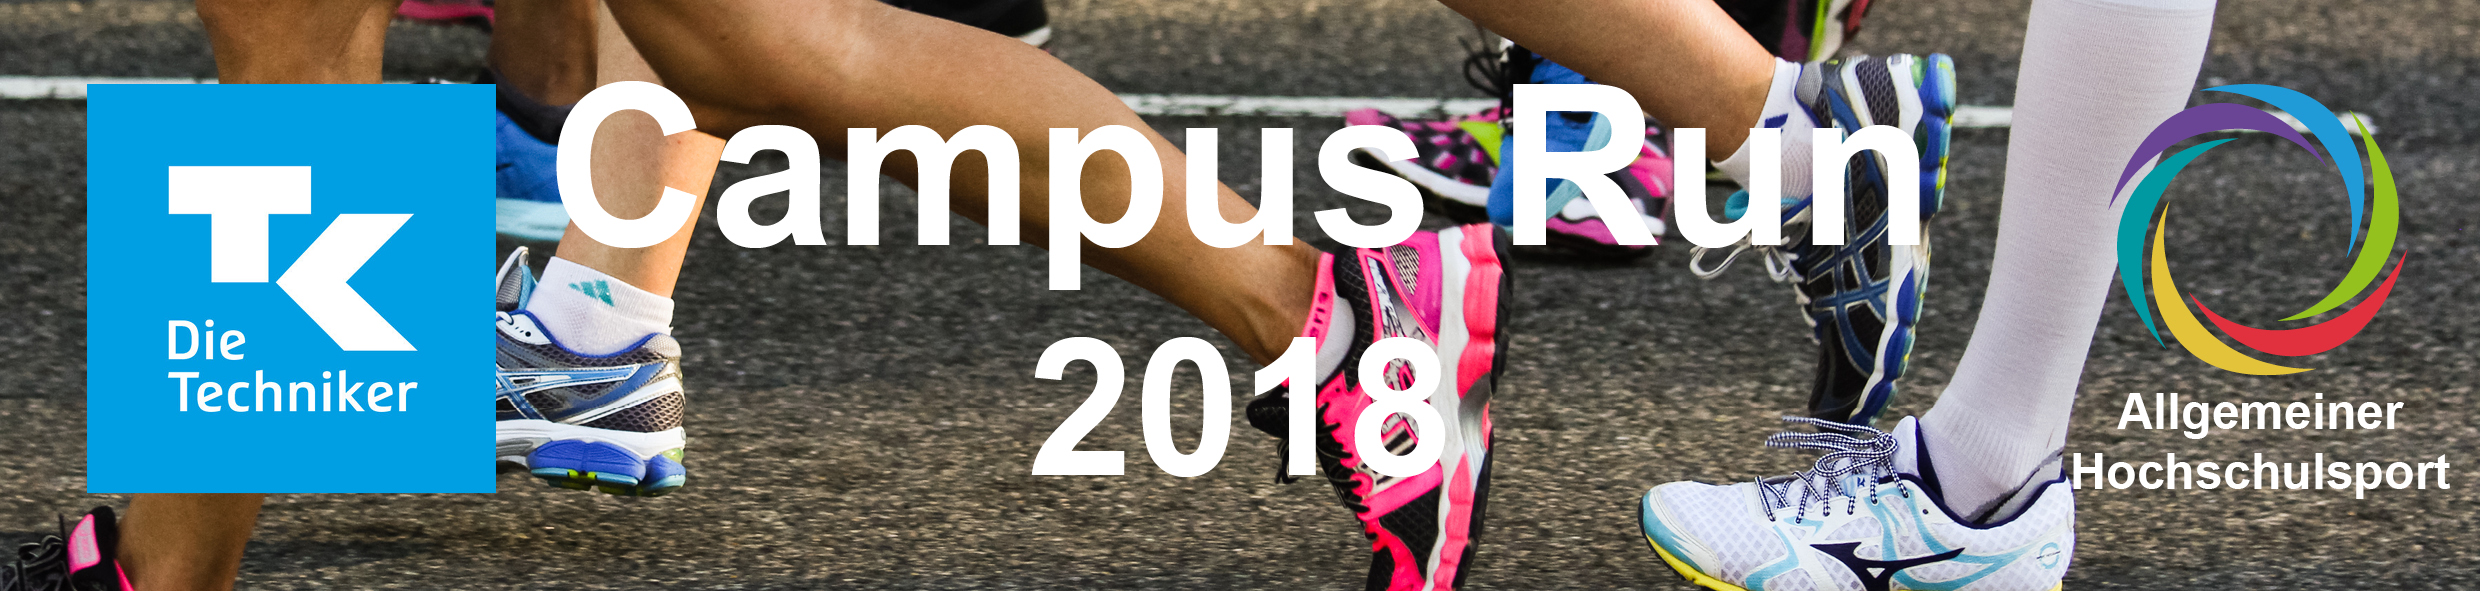 TK Campus Run 2018